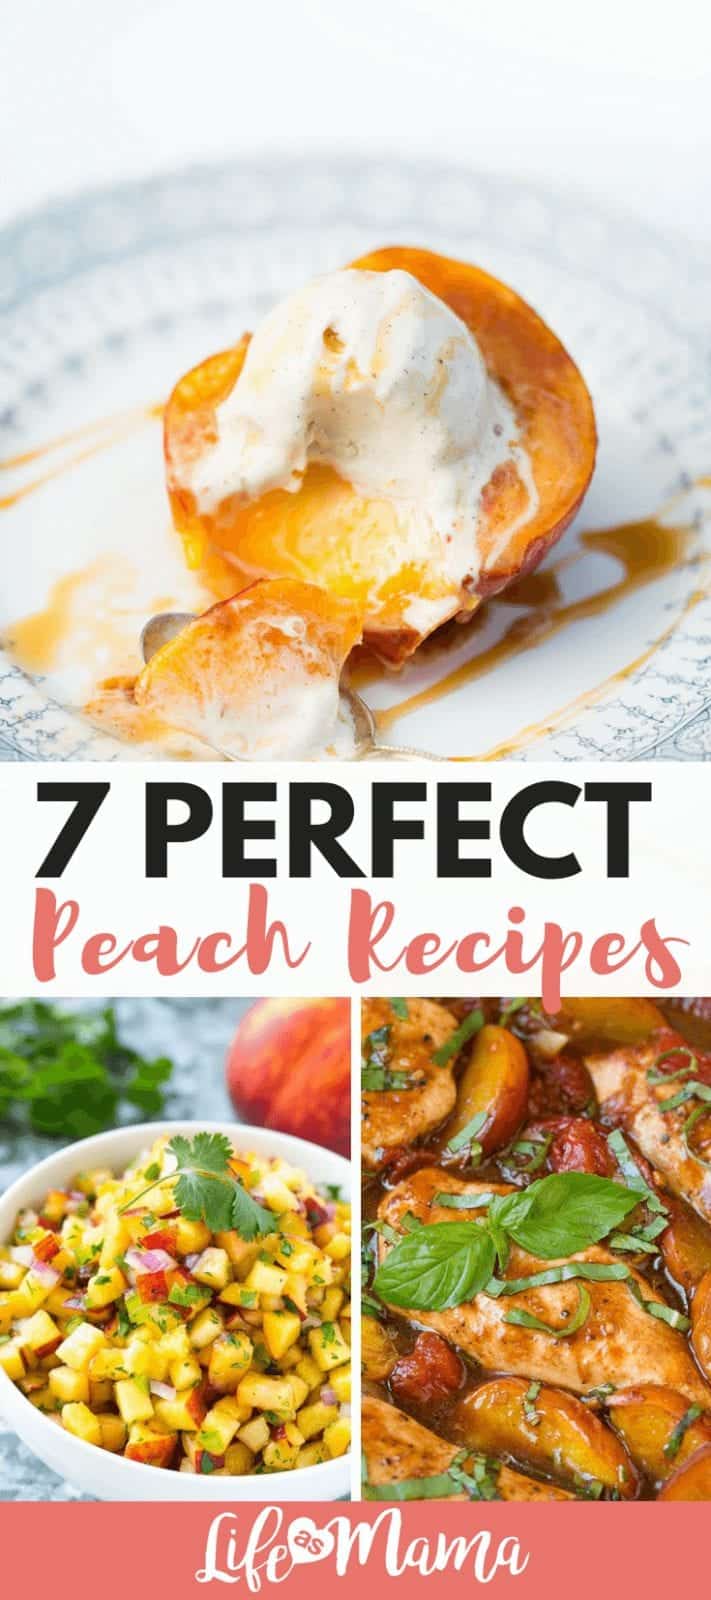 7 Perfect Peach Recipes